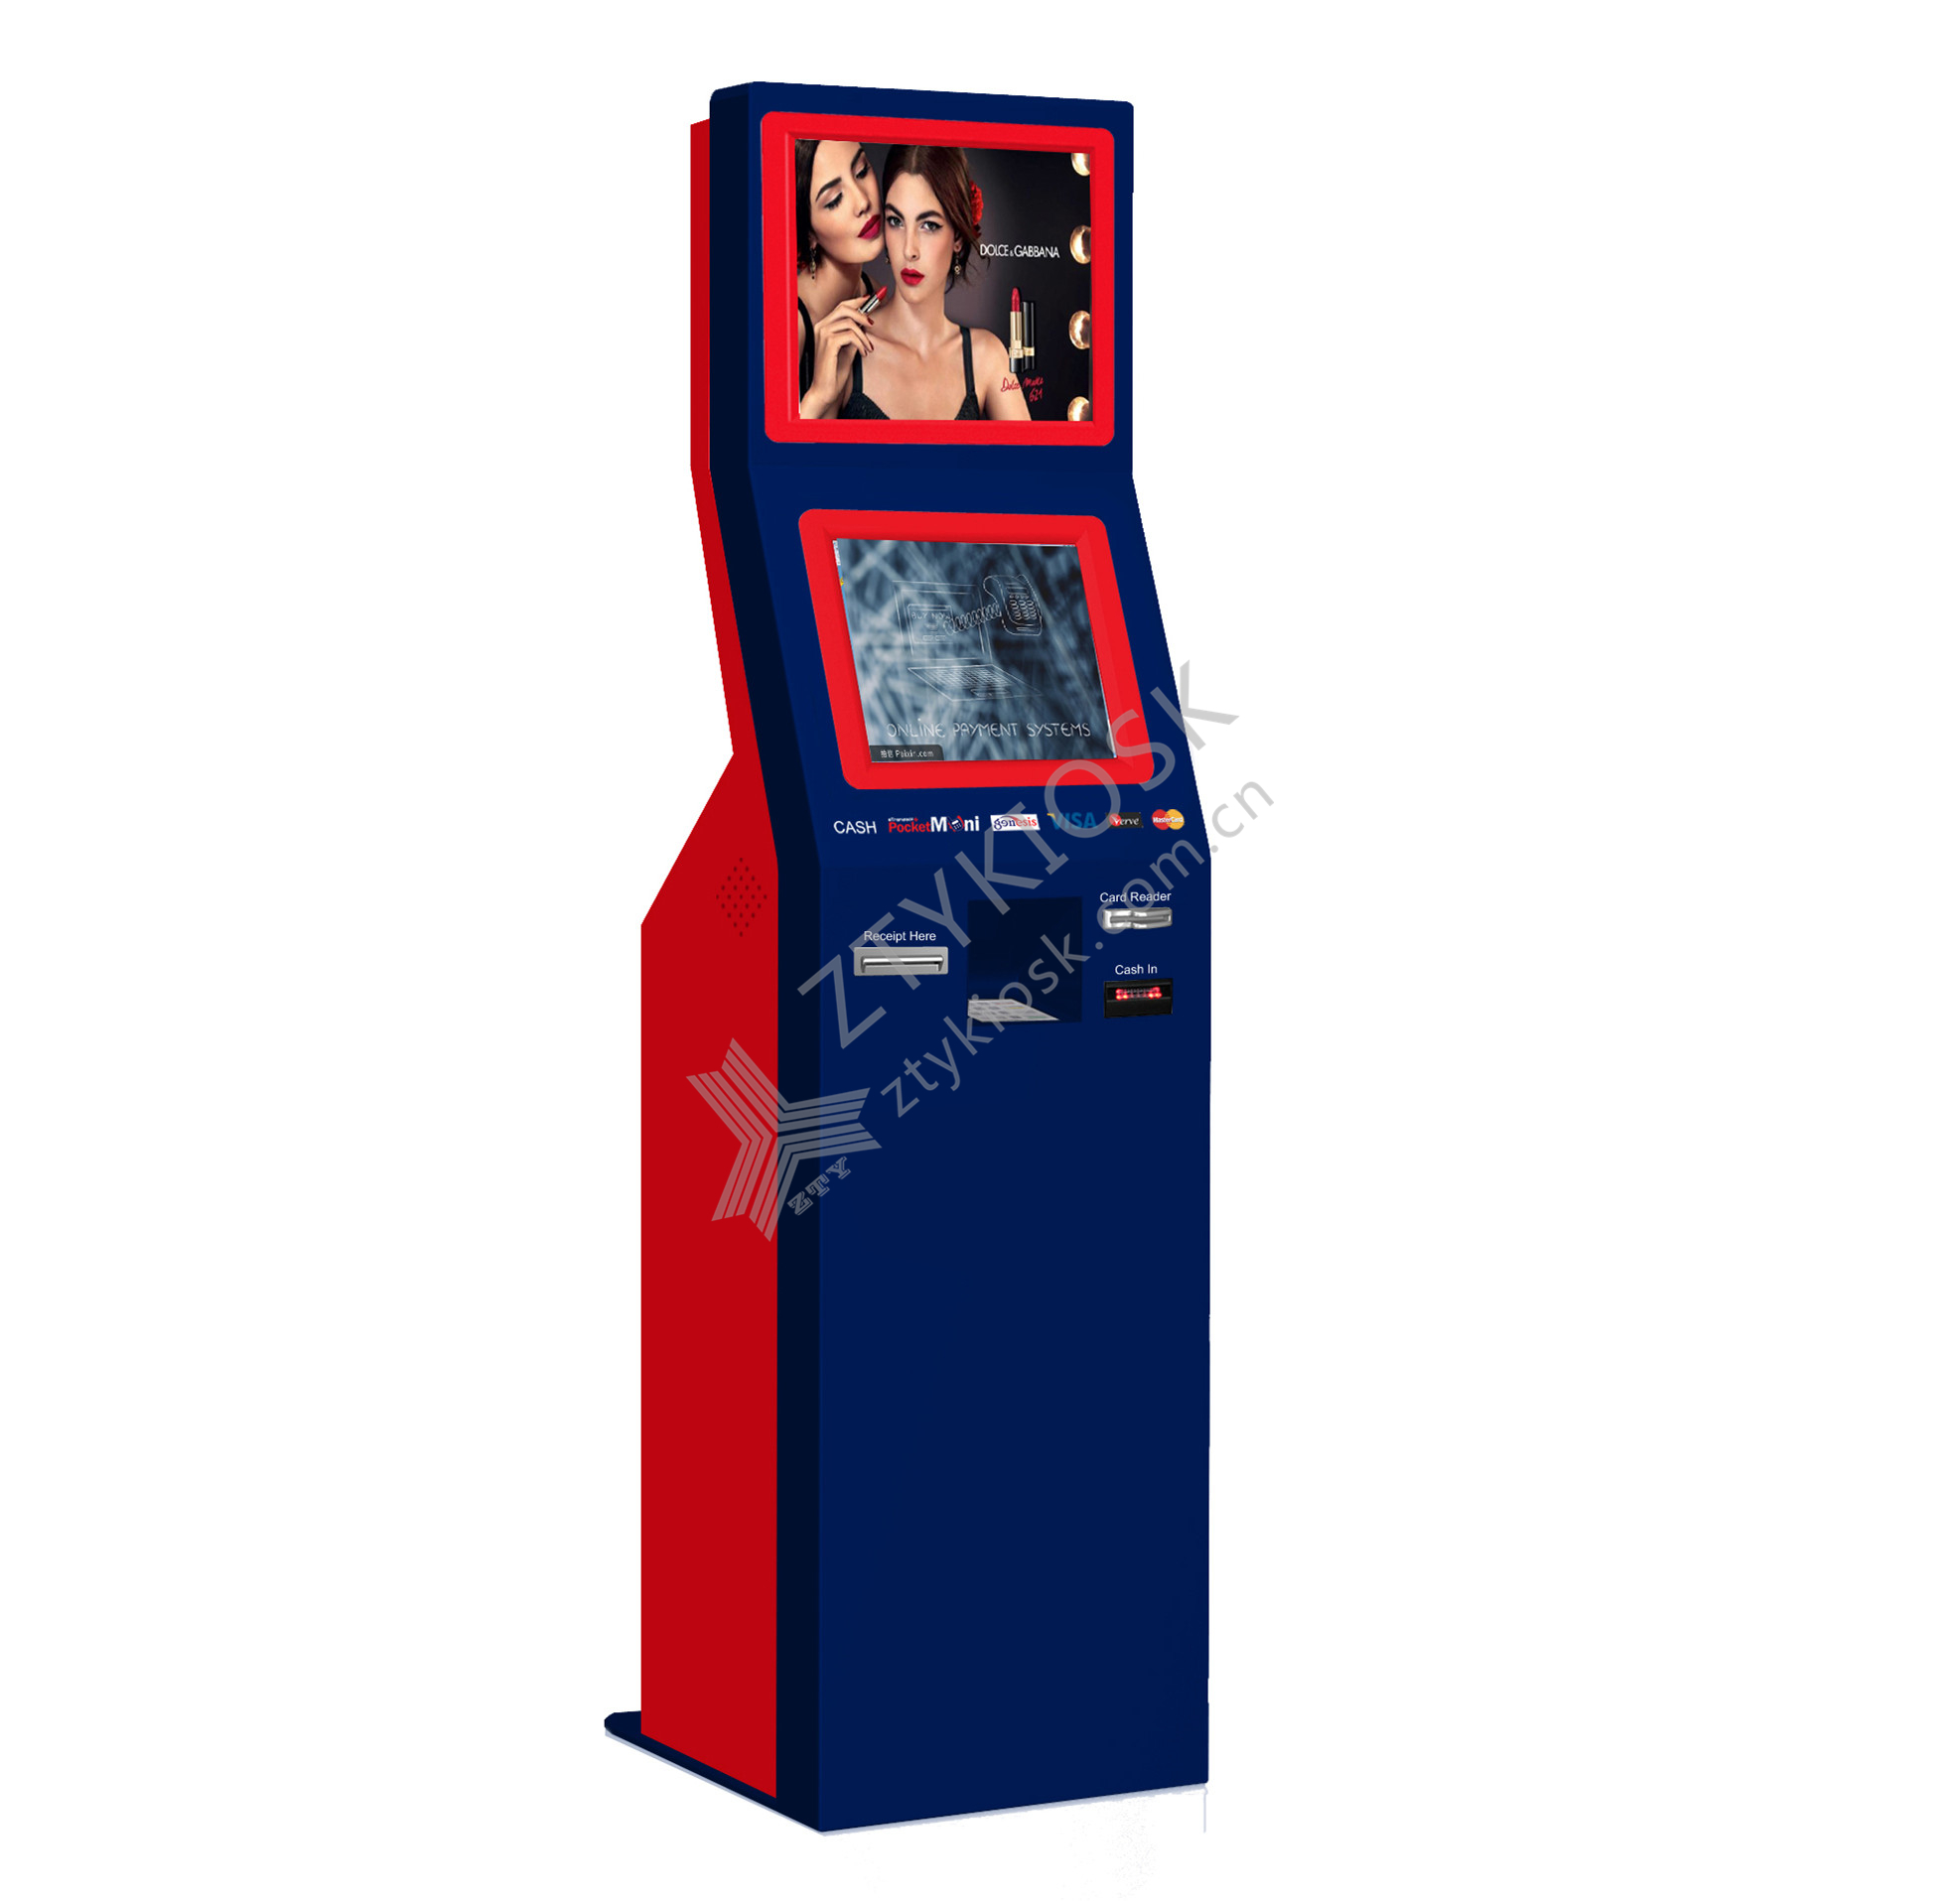 Dual-Screen Cash/Cashless payment kiosk